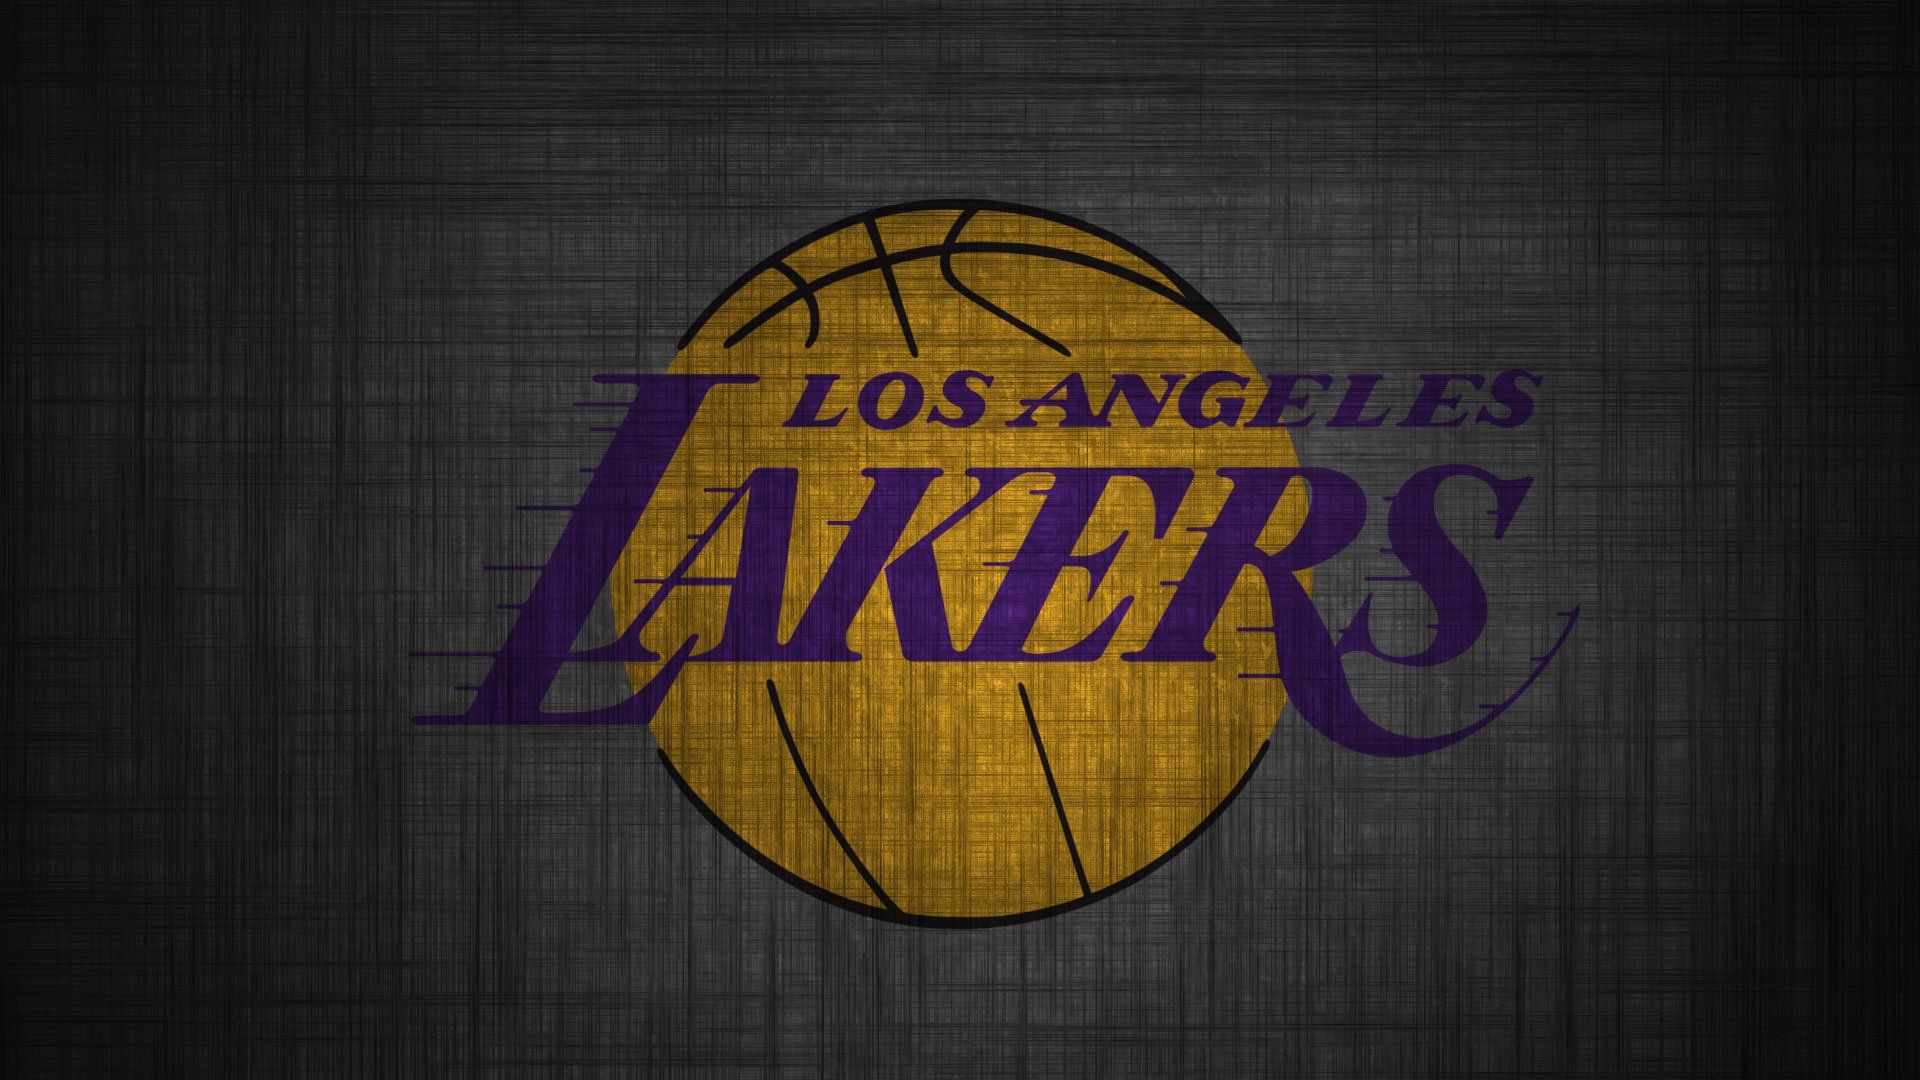 Cool Nba Wallpaper HD Lakers image